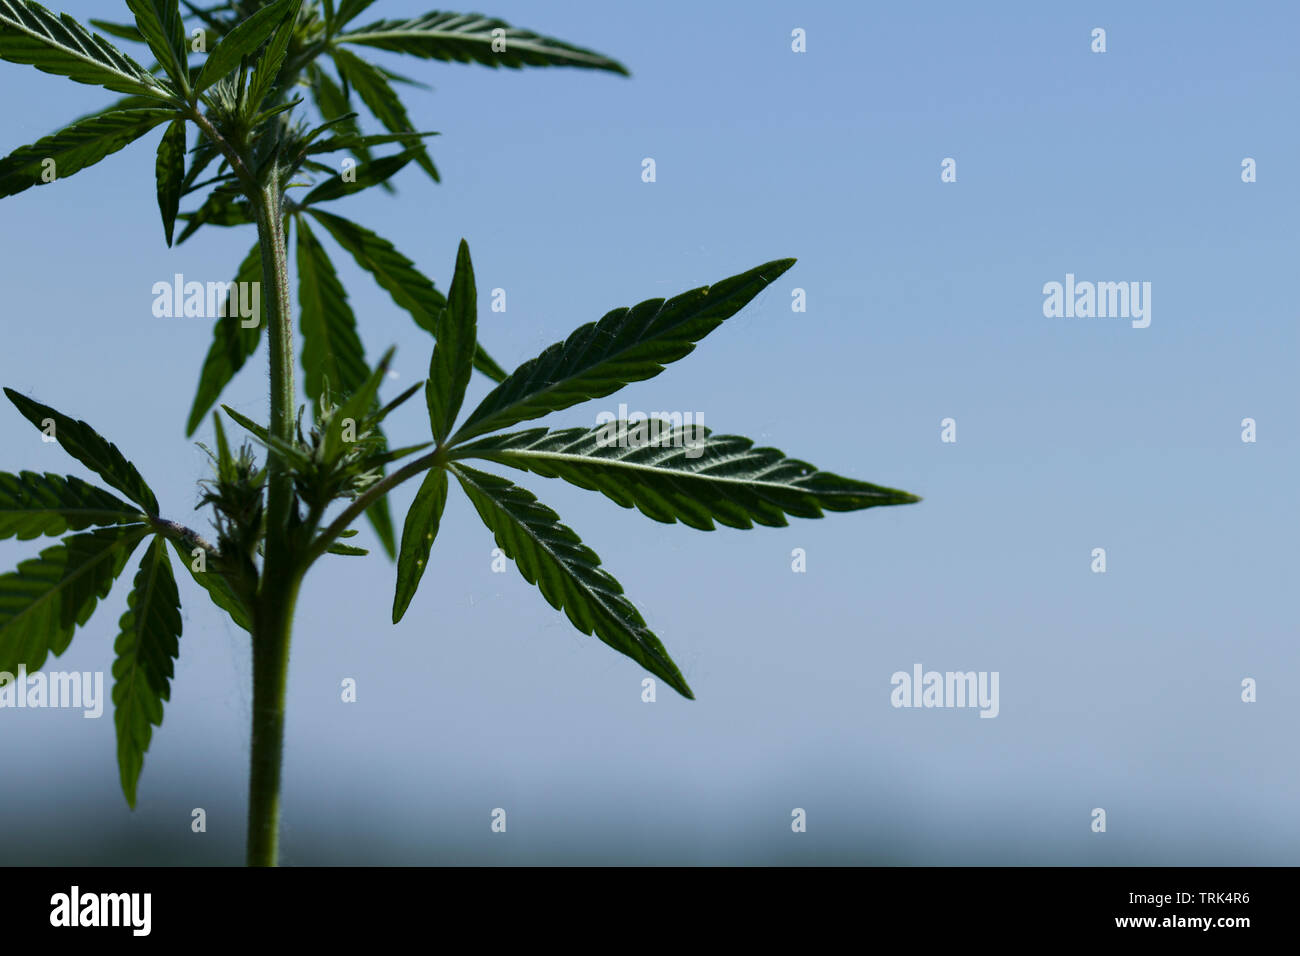 Hanfsamen, Samen, cannabis Stock Photo - Alamy